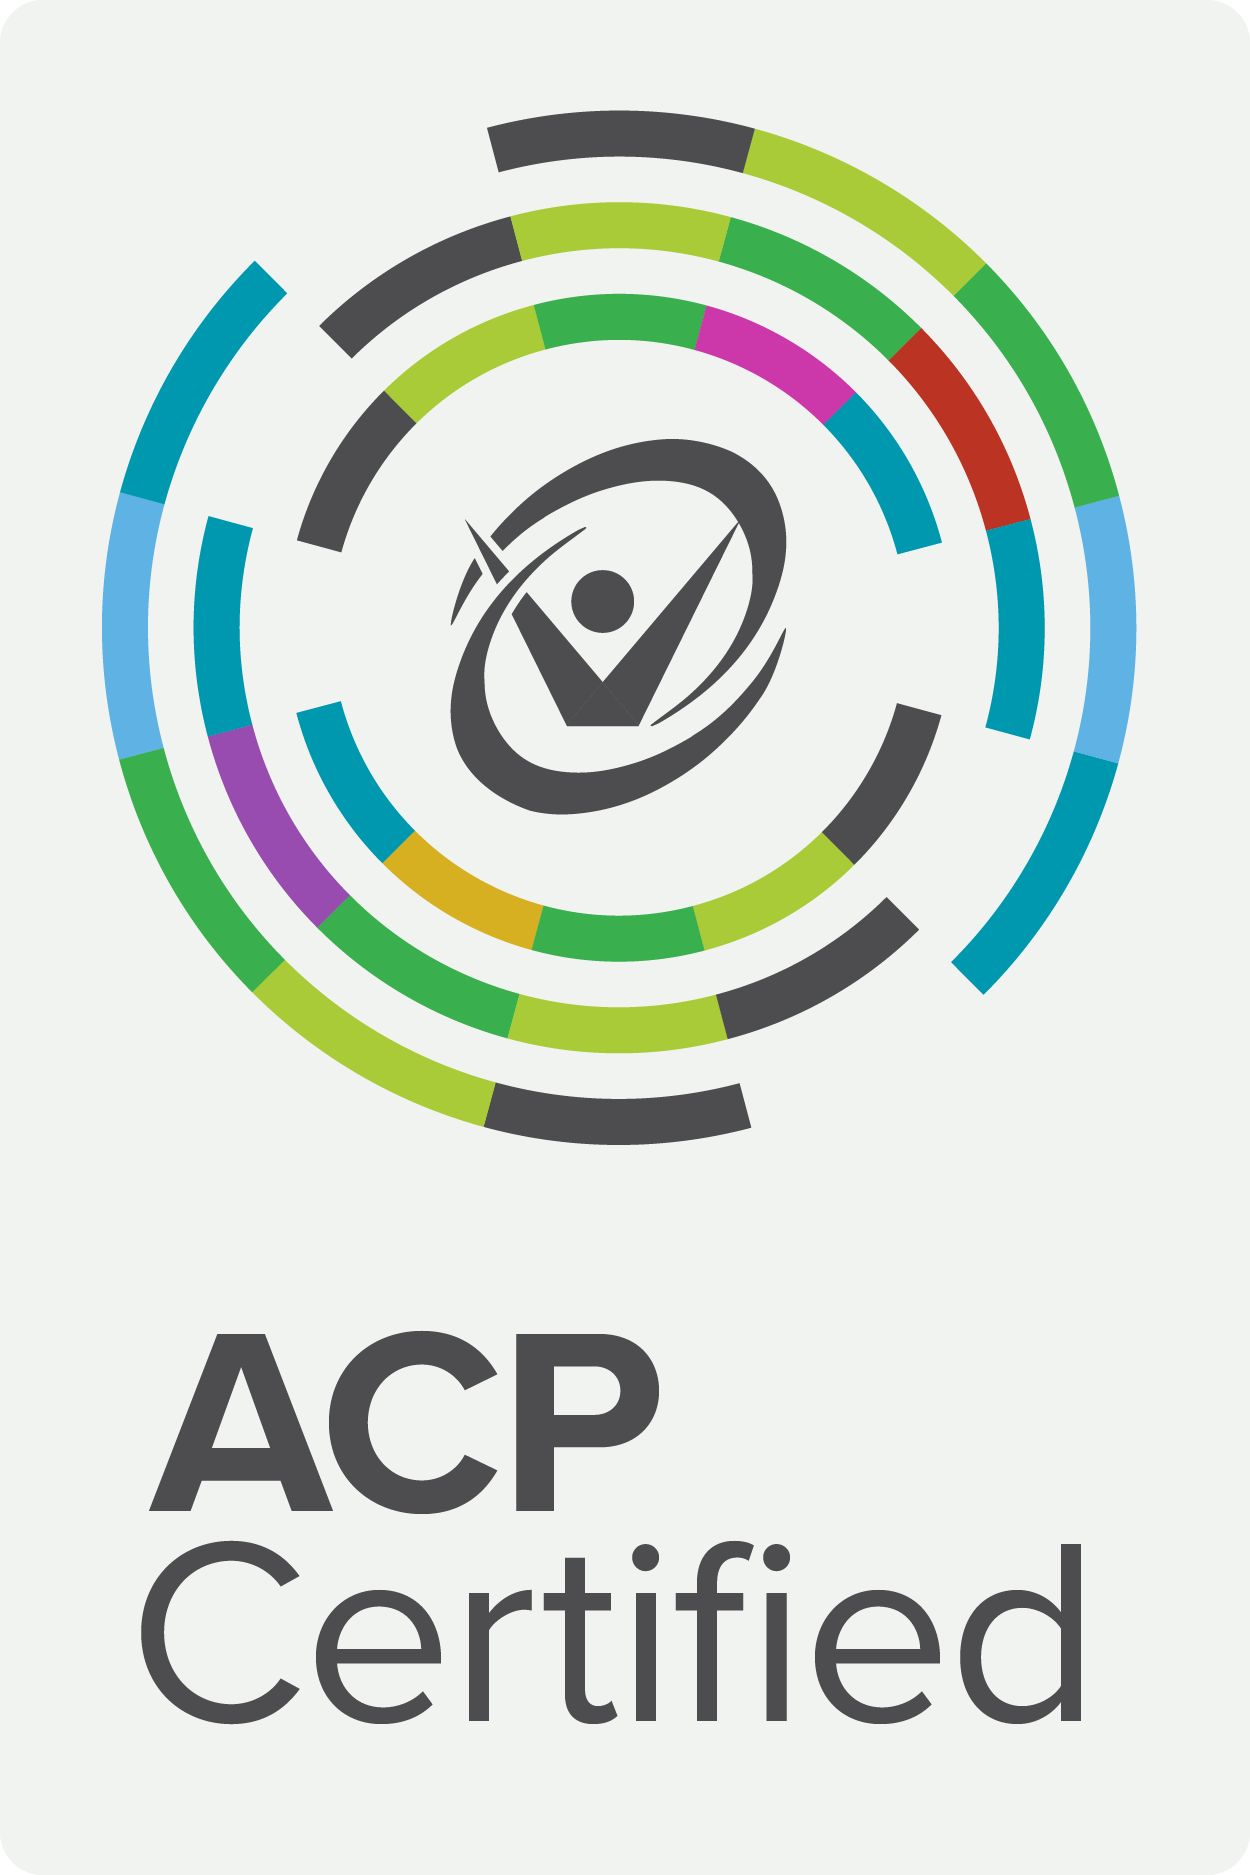 acp certified logo